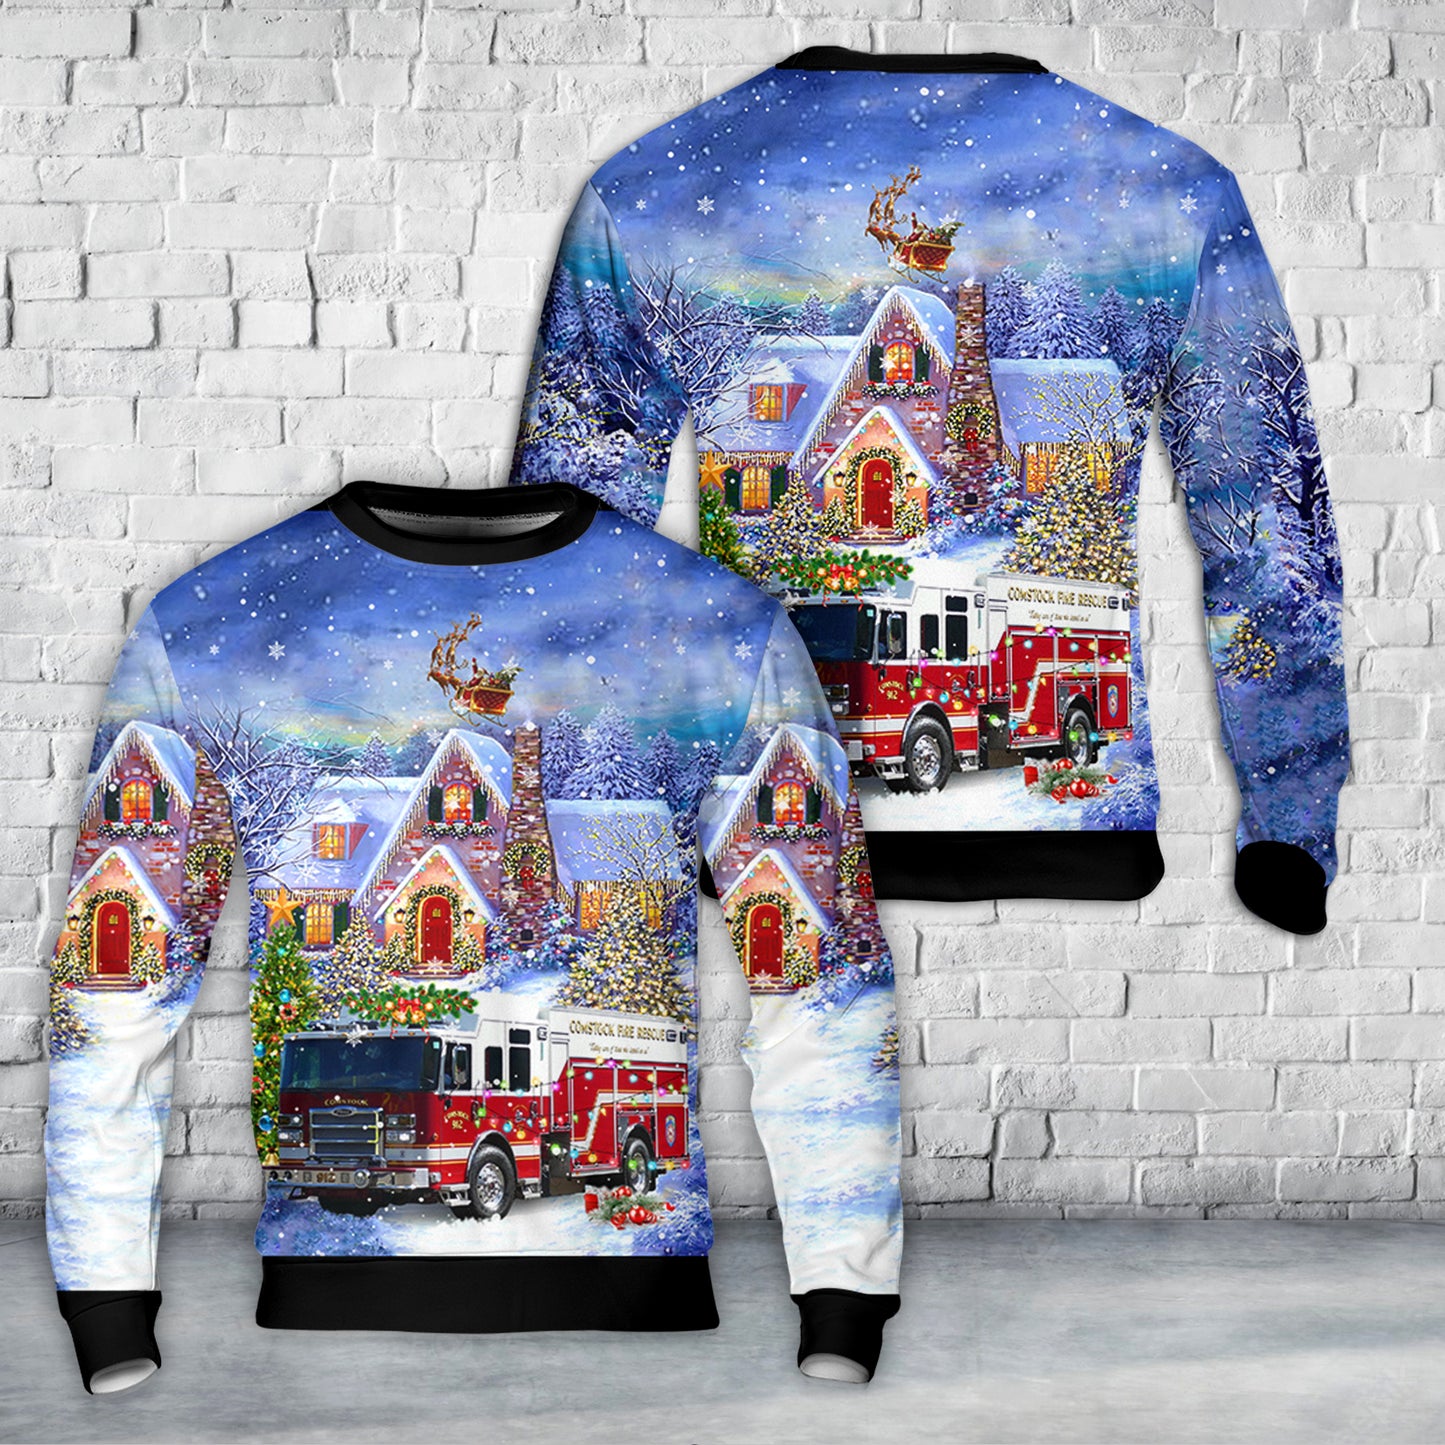 Comstock Fire & Rescue, Kalamazoo, Michigan Christmas Sweater